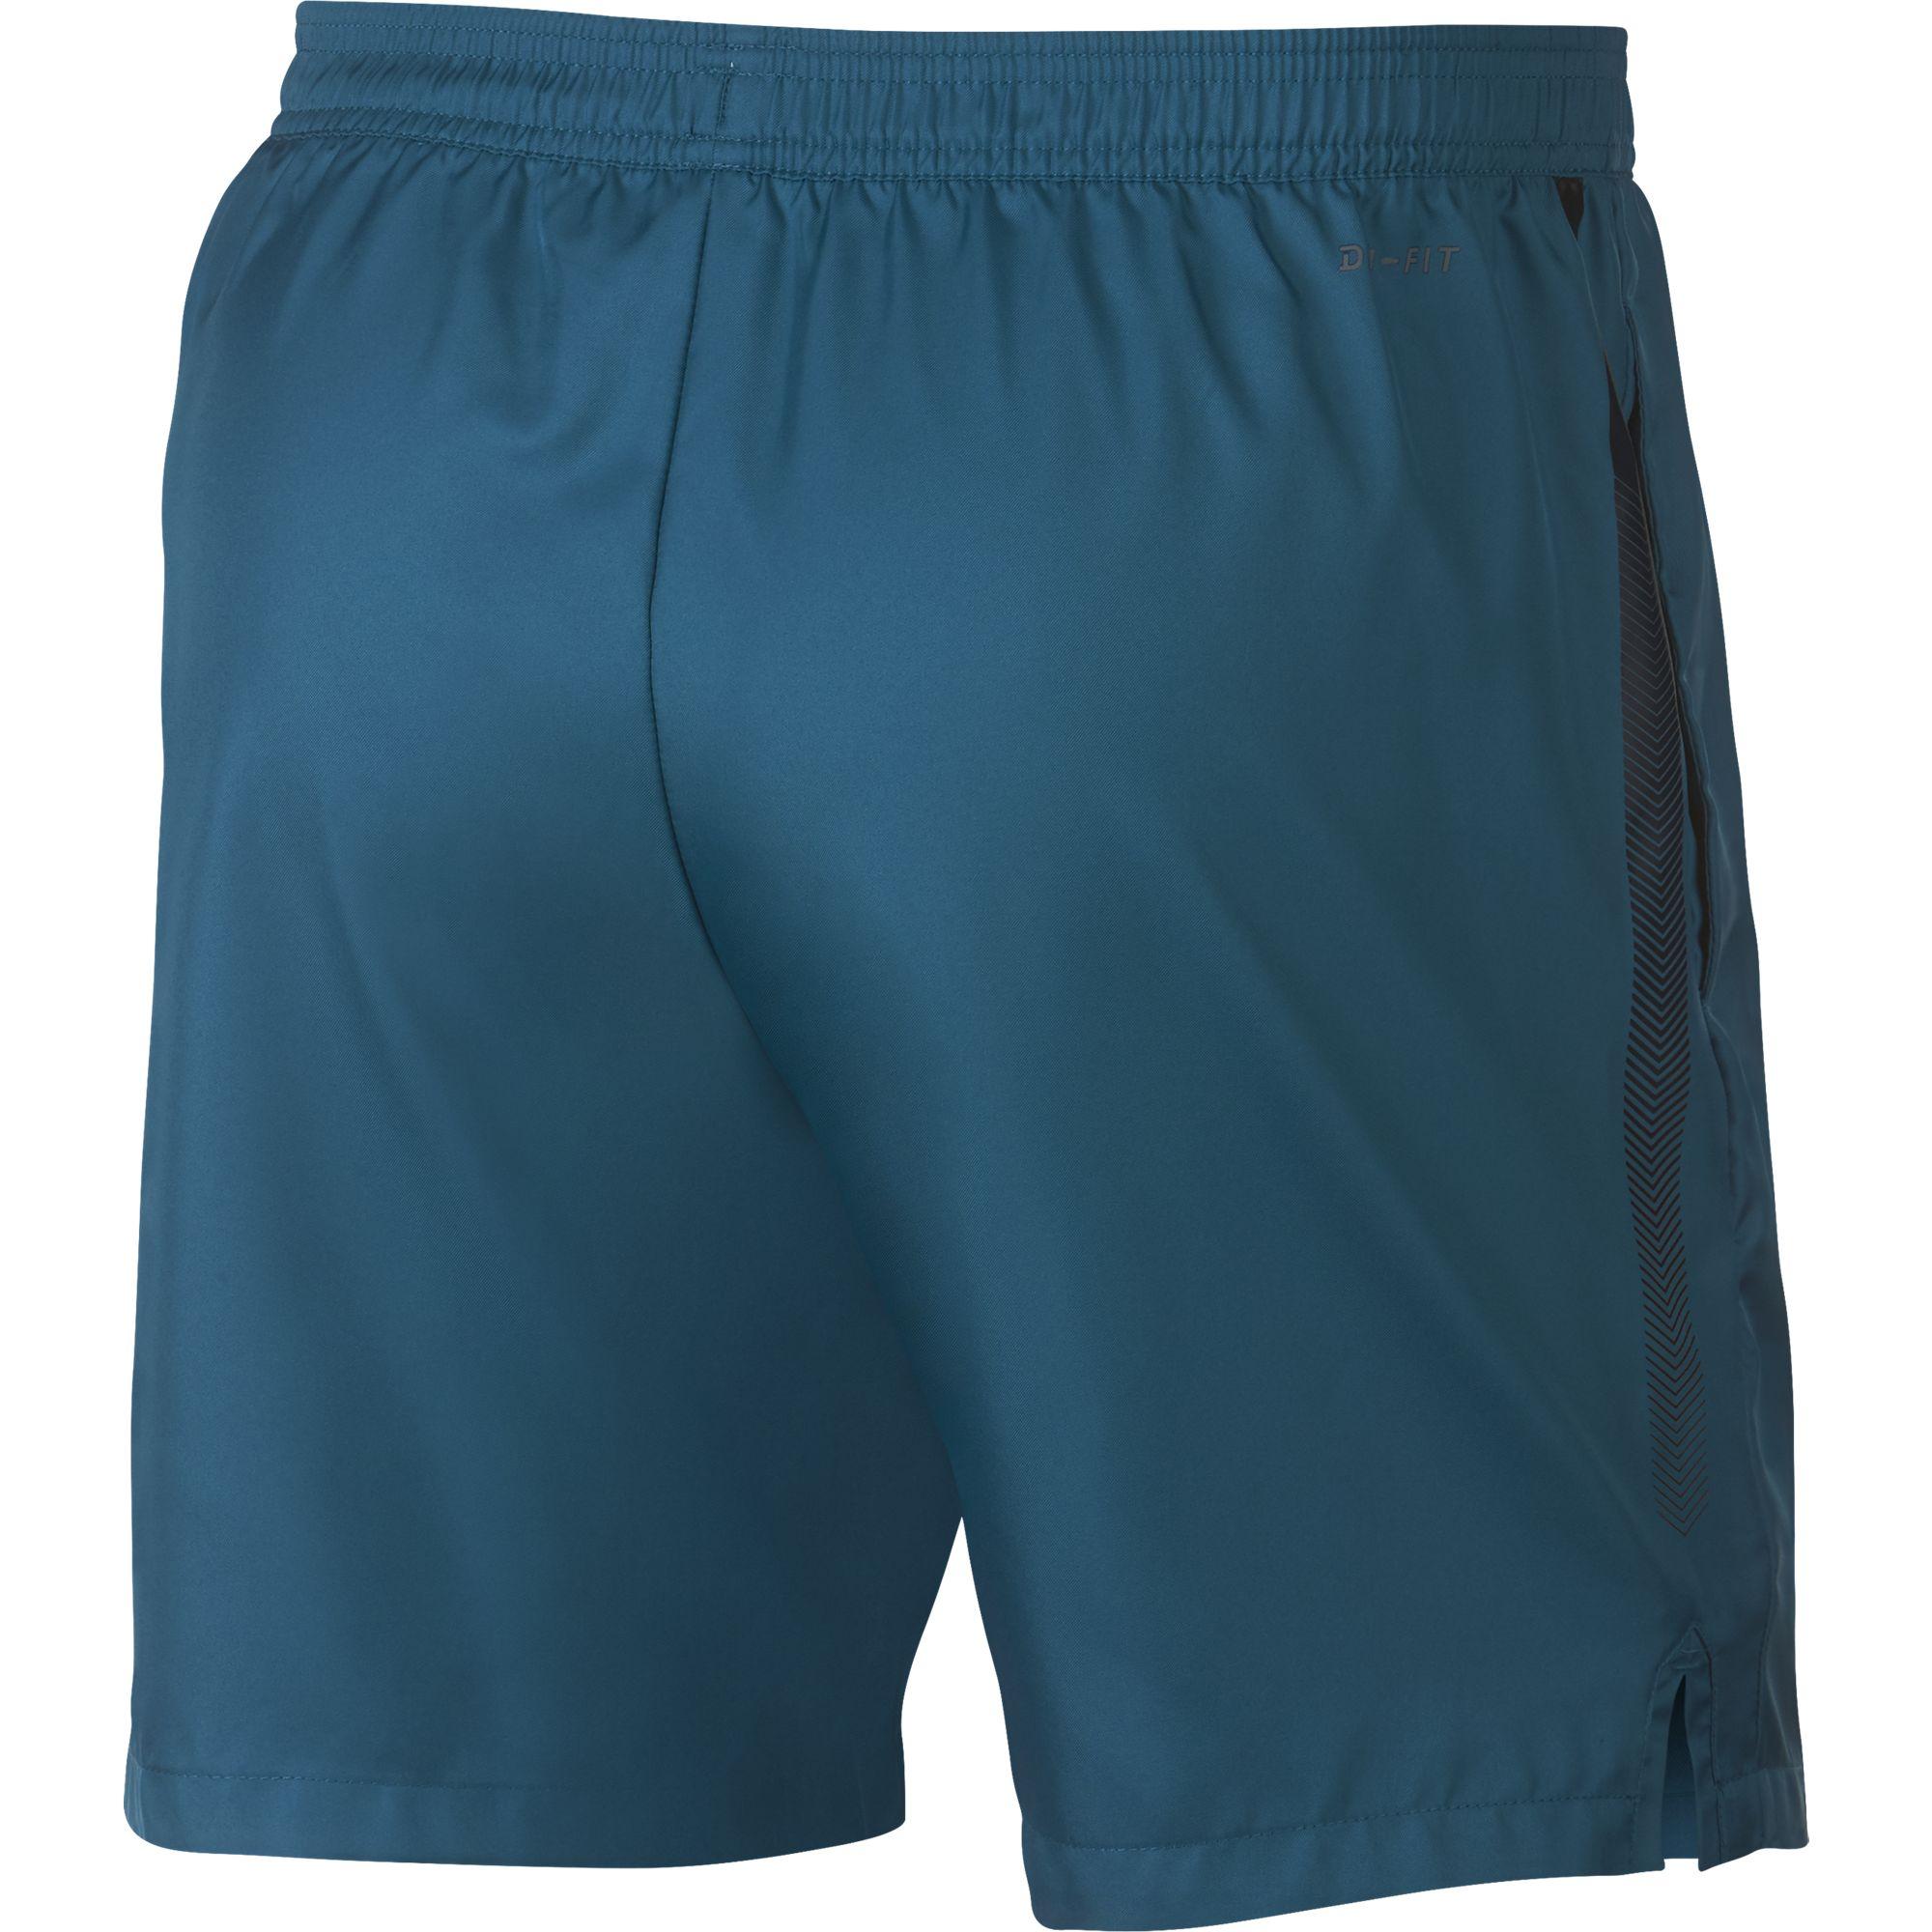 Nike Mens Dry 7 Inch Tennis Shorts - Green Abyss/Black - Tennisnuts.com